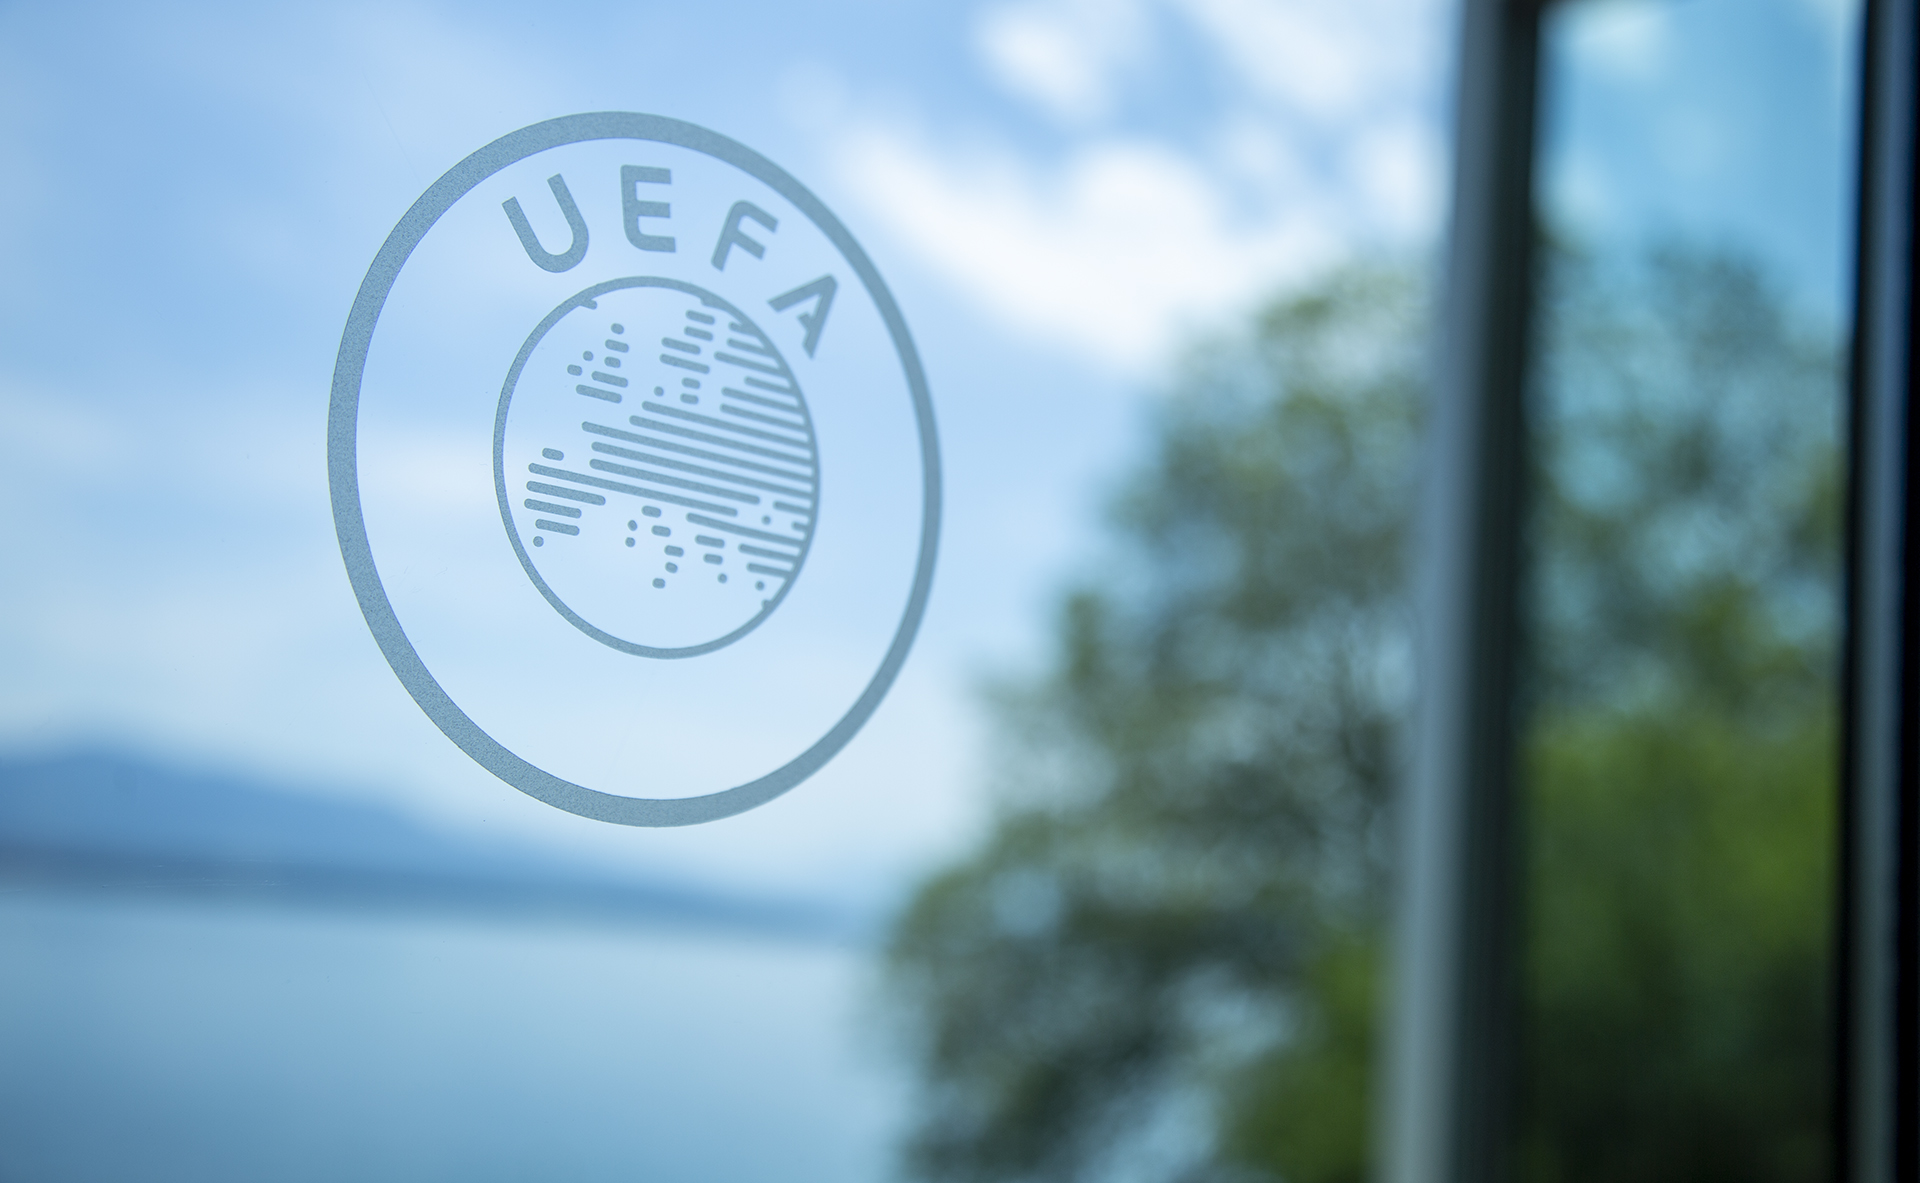 UEFA HQ, Nyon, Switzerland | © NCM Media